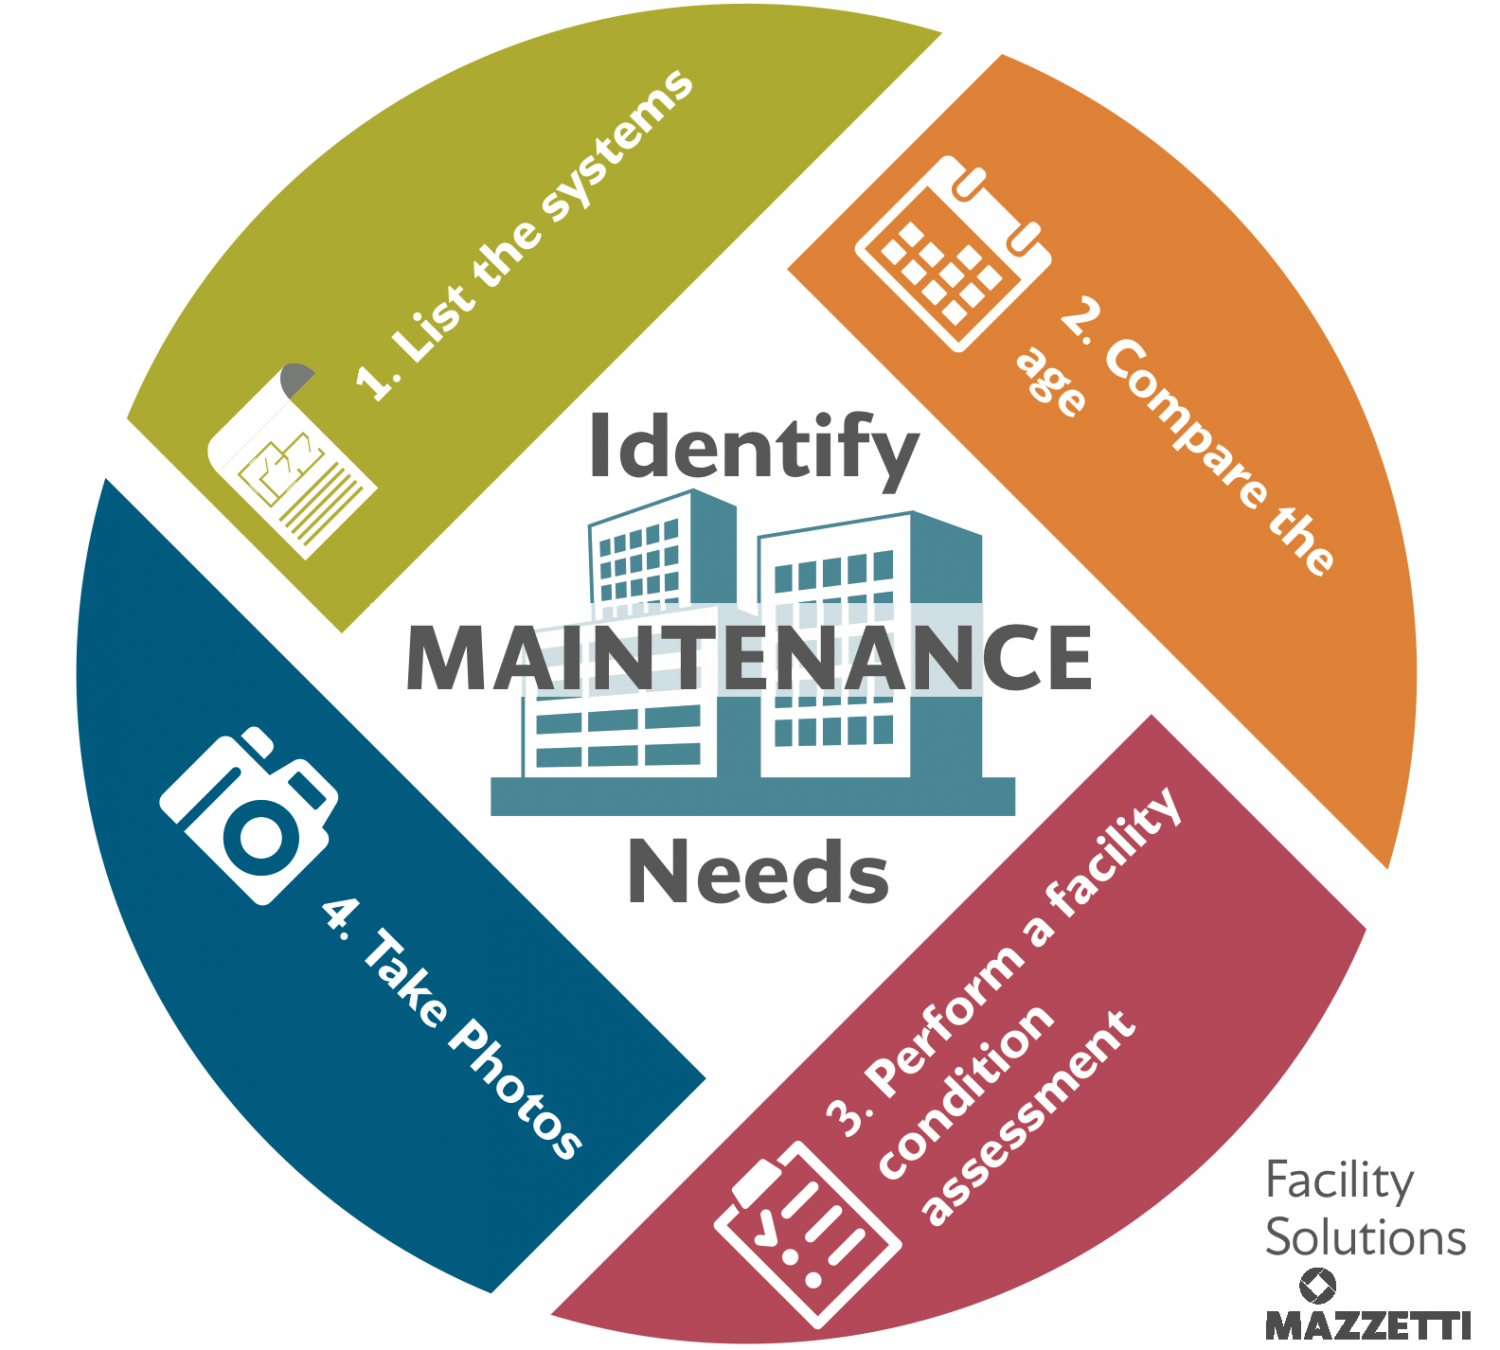 identify-needs-planned-maintenace